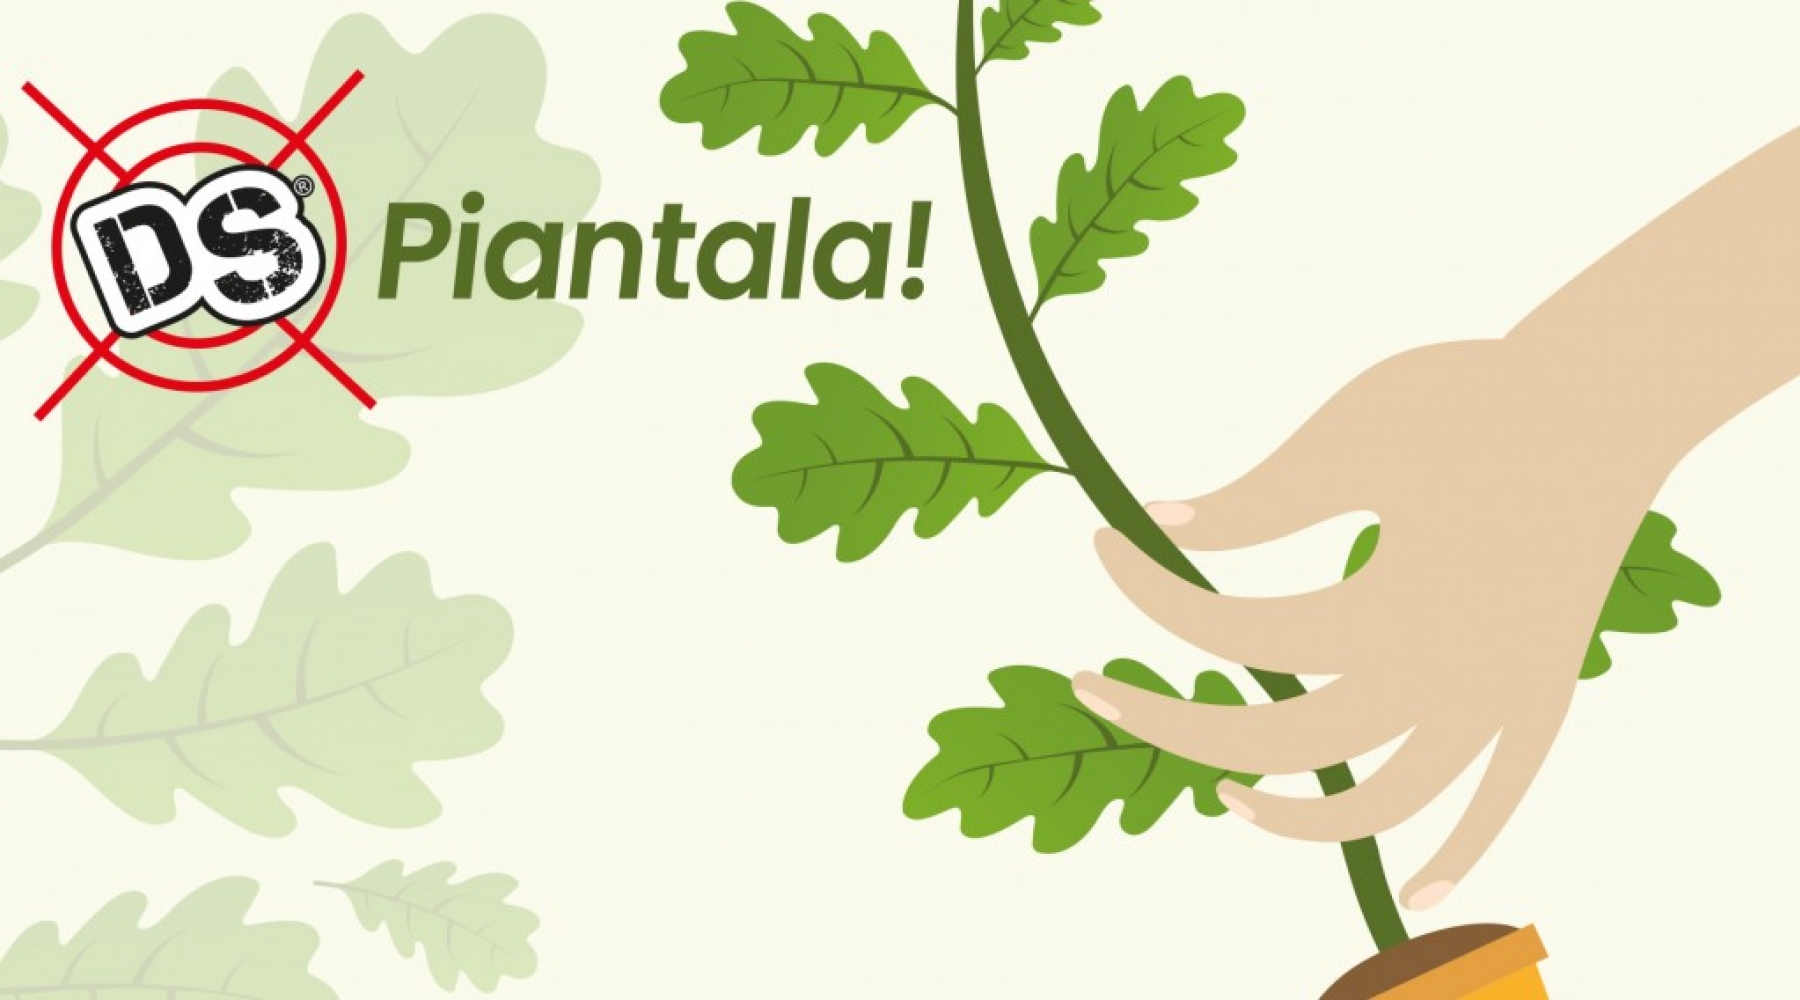 Plant it! An Oak tree in defense of sustainability